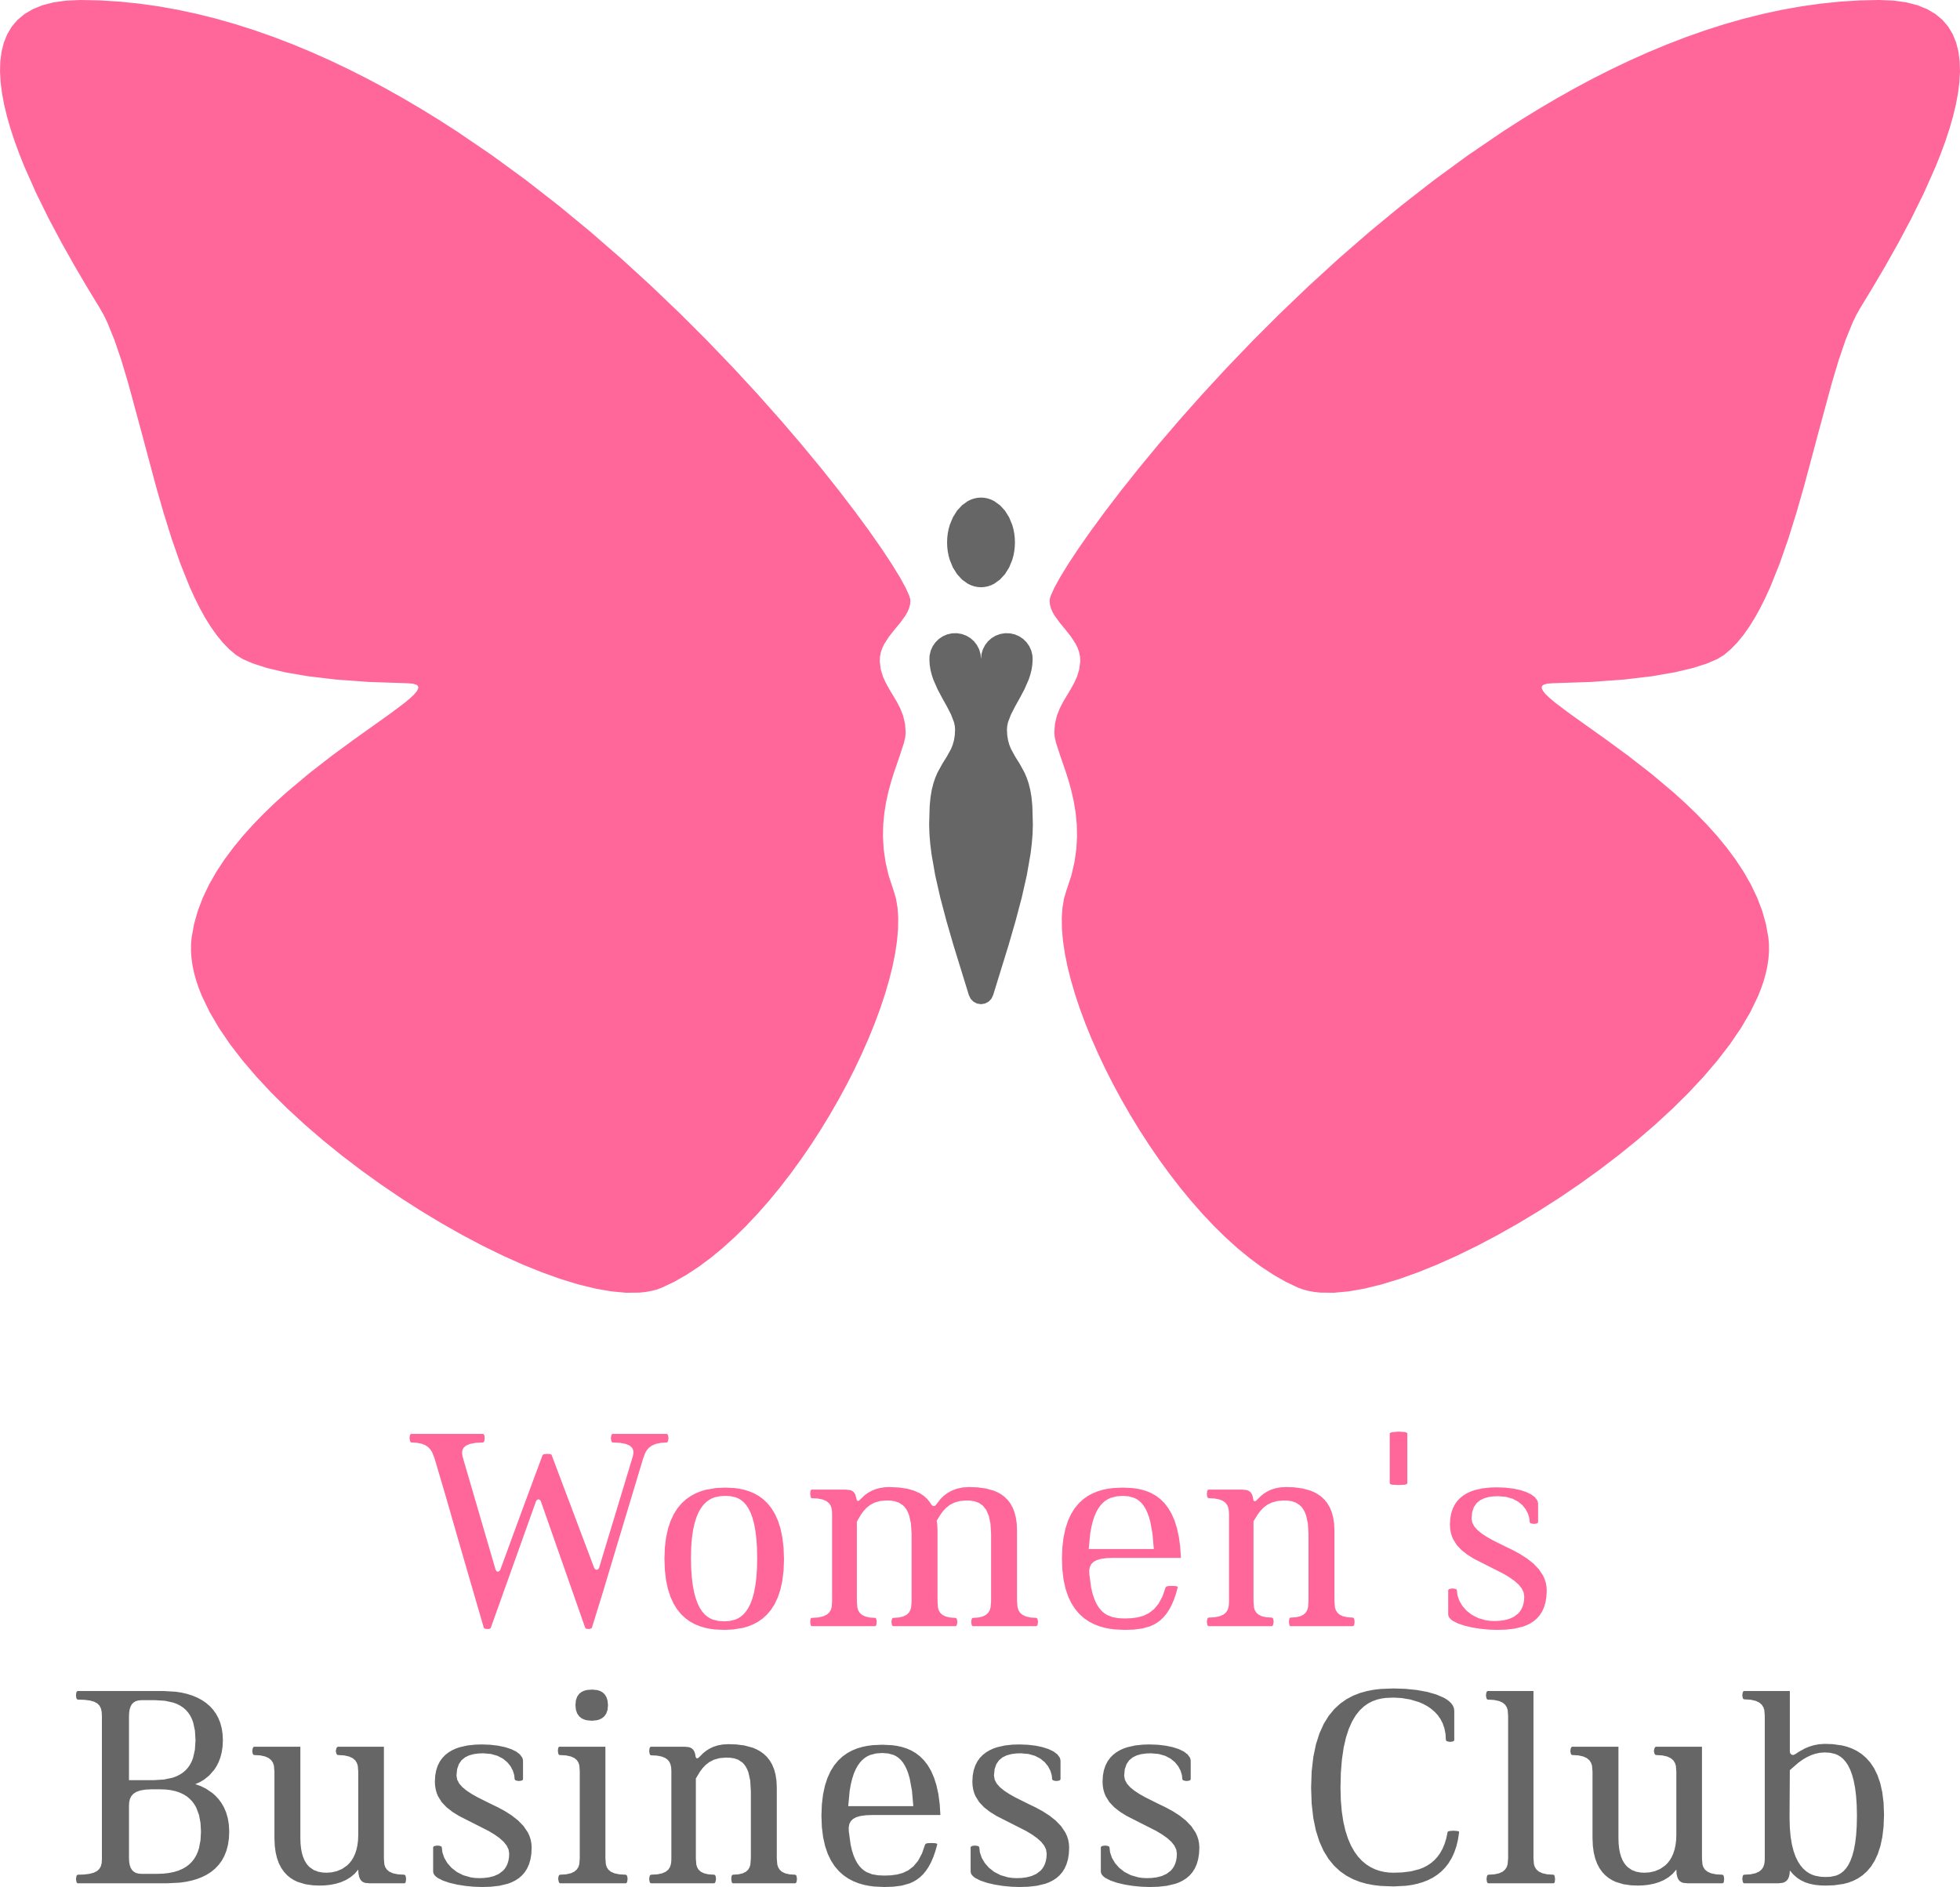 Bath Women's Business Club - business networking, training, mastermind